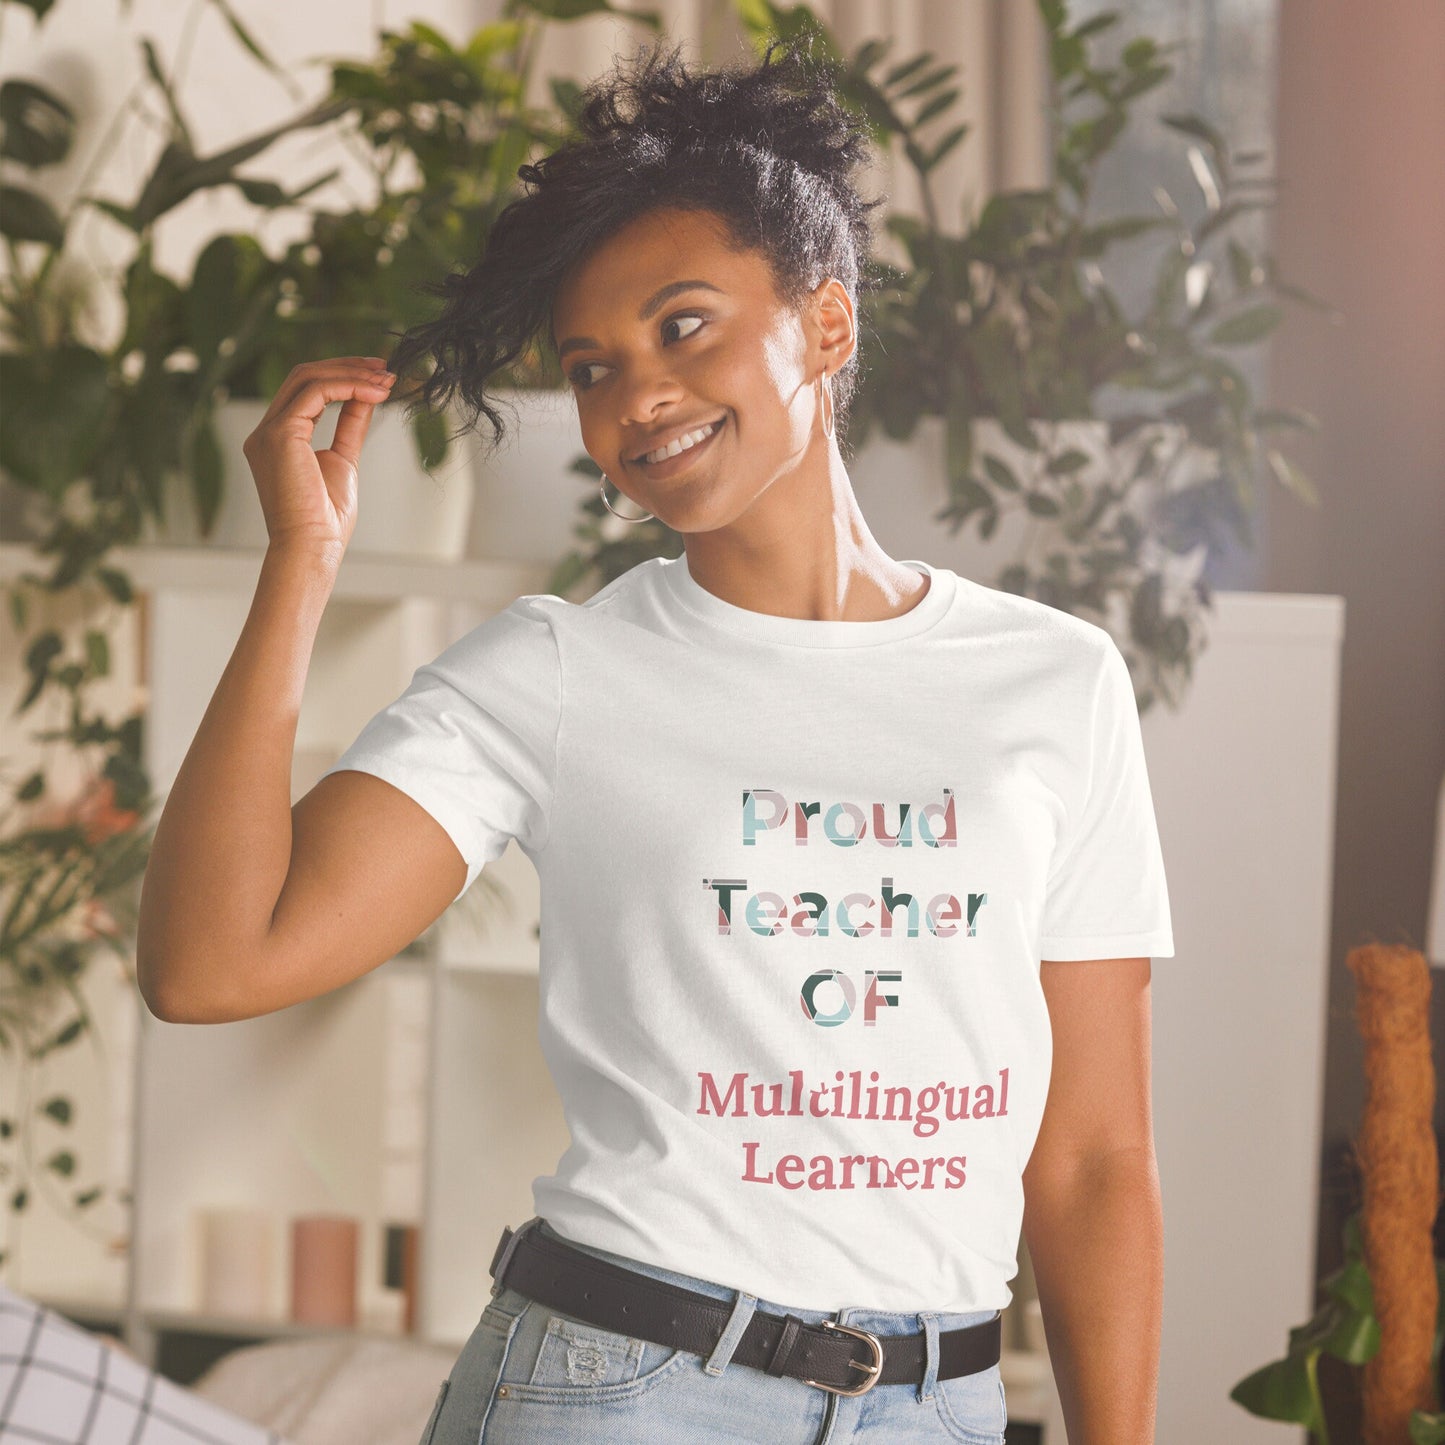 Proud Teacher of Multilingual Learners T-shirt